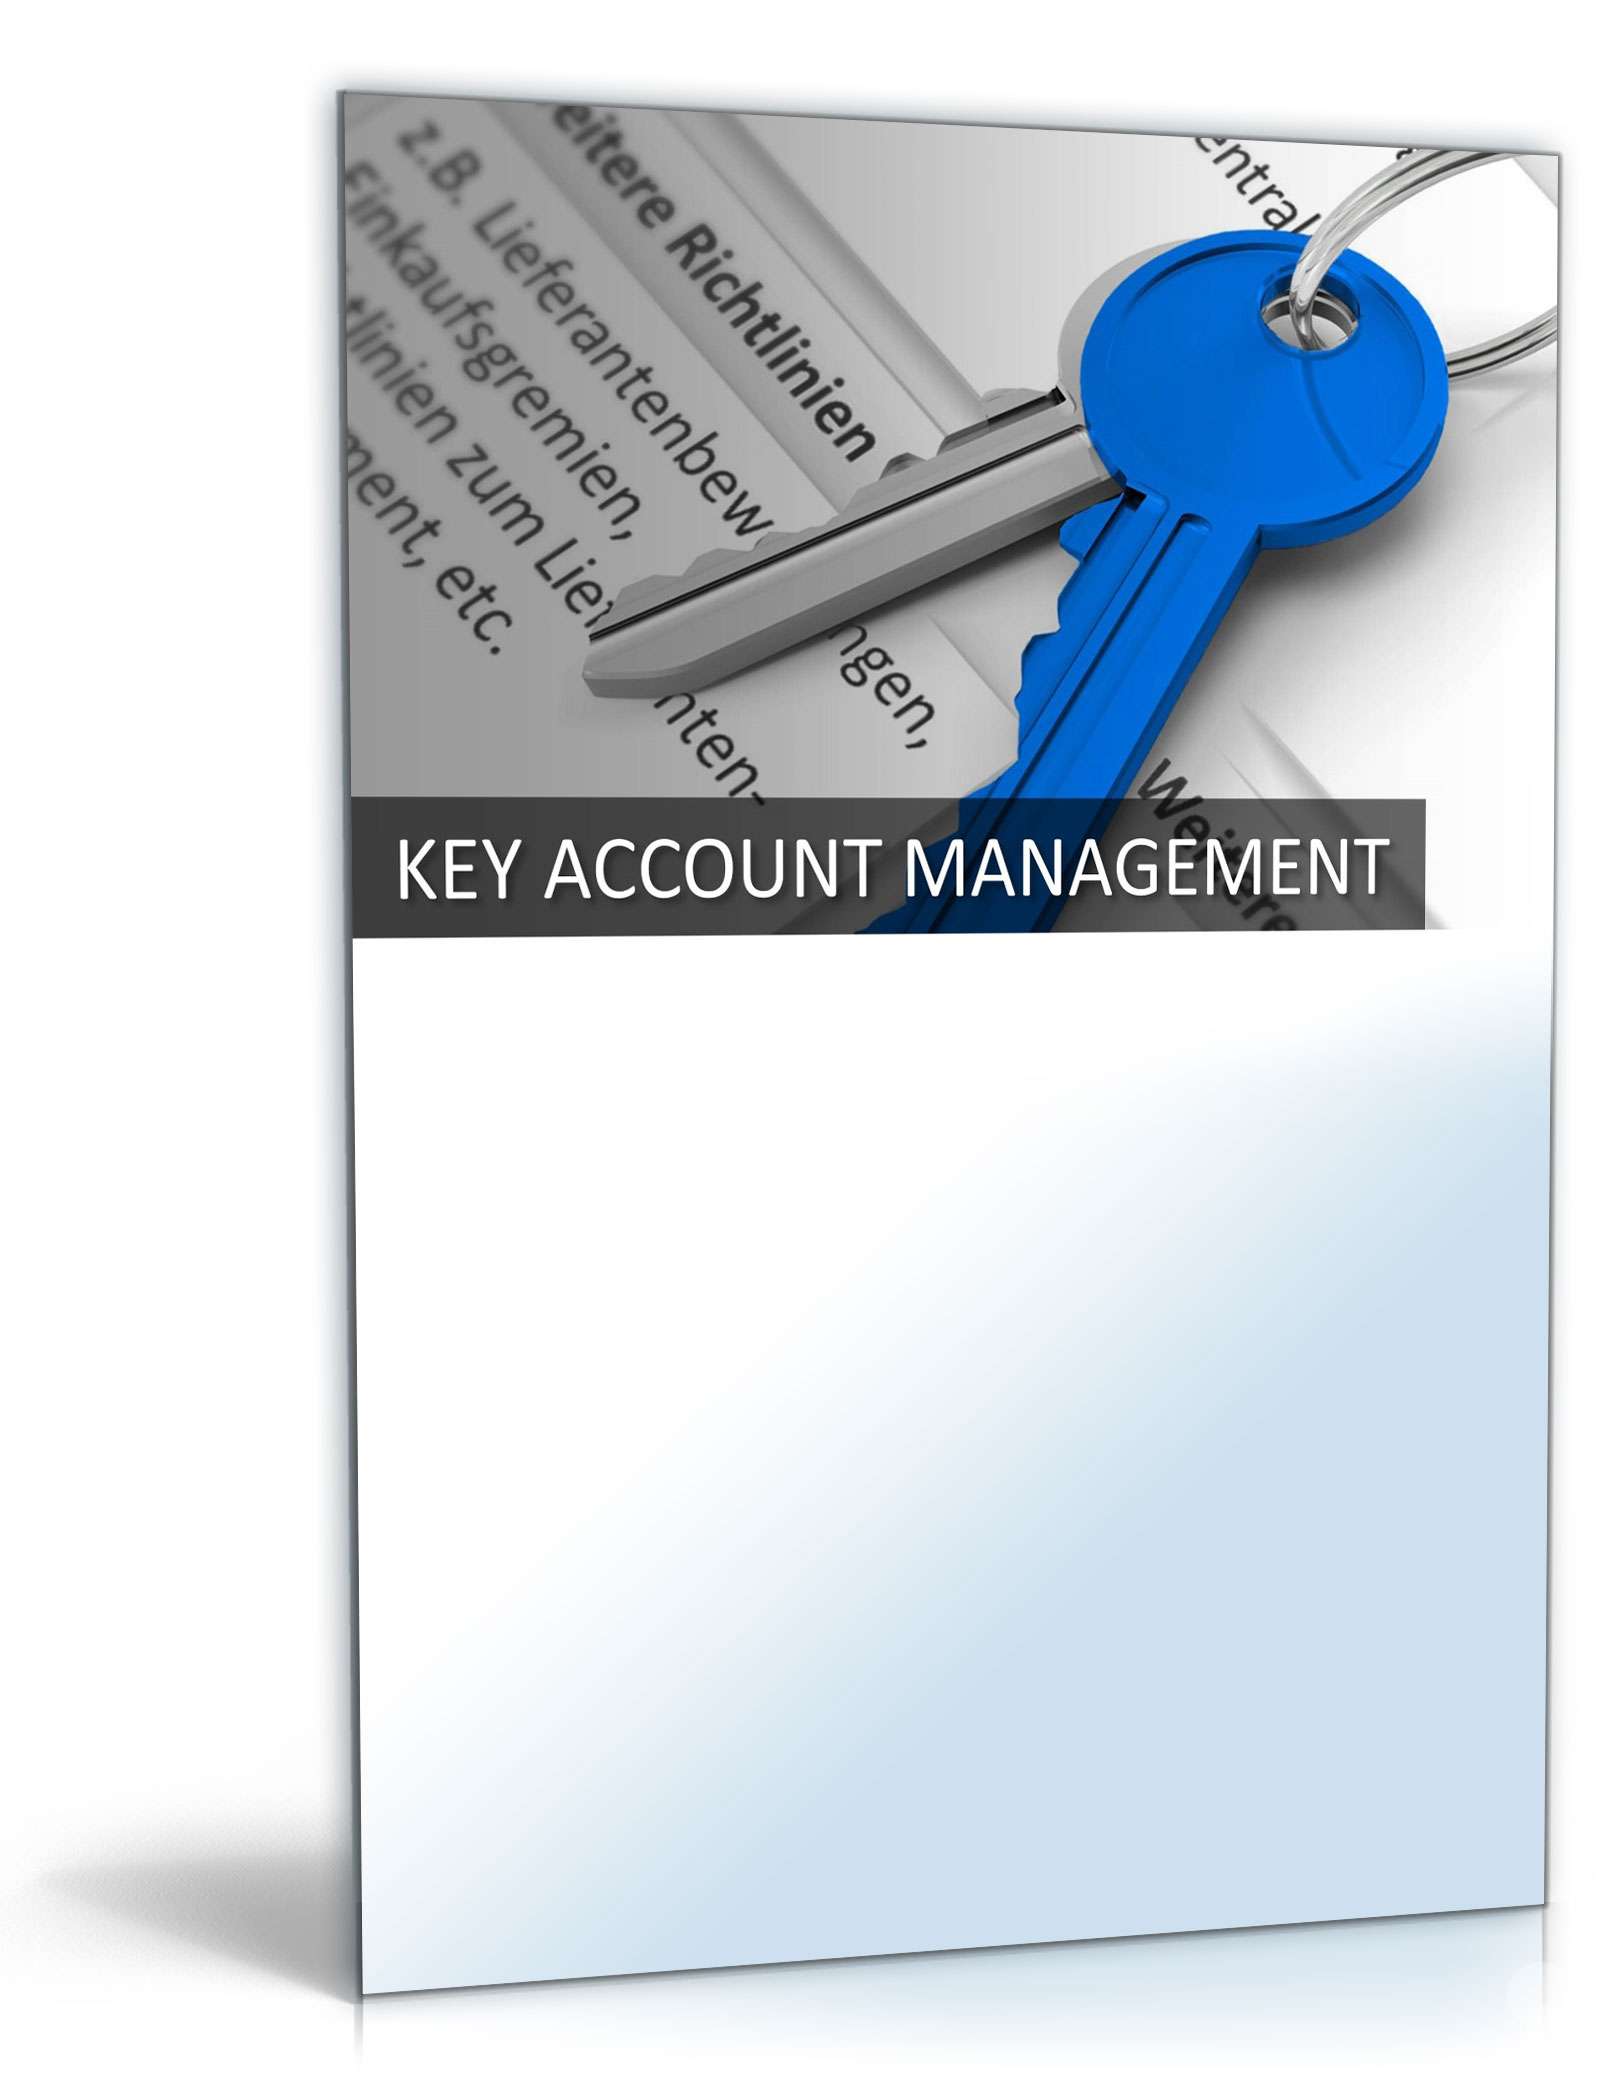 Hauptbild des Produkts: PowerPoint-Vorlage Key Account Management